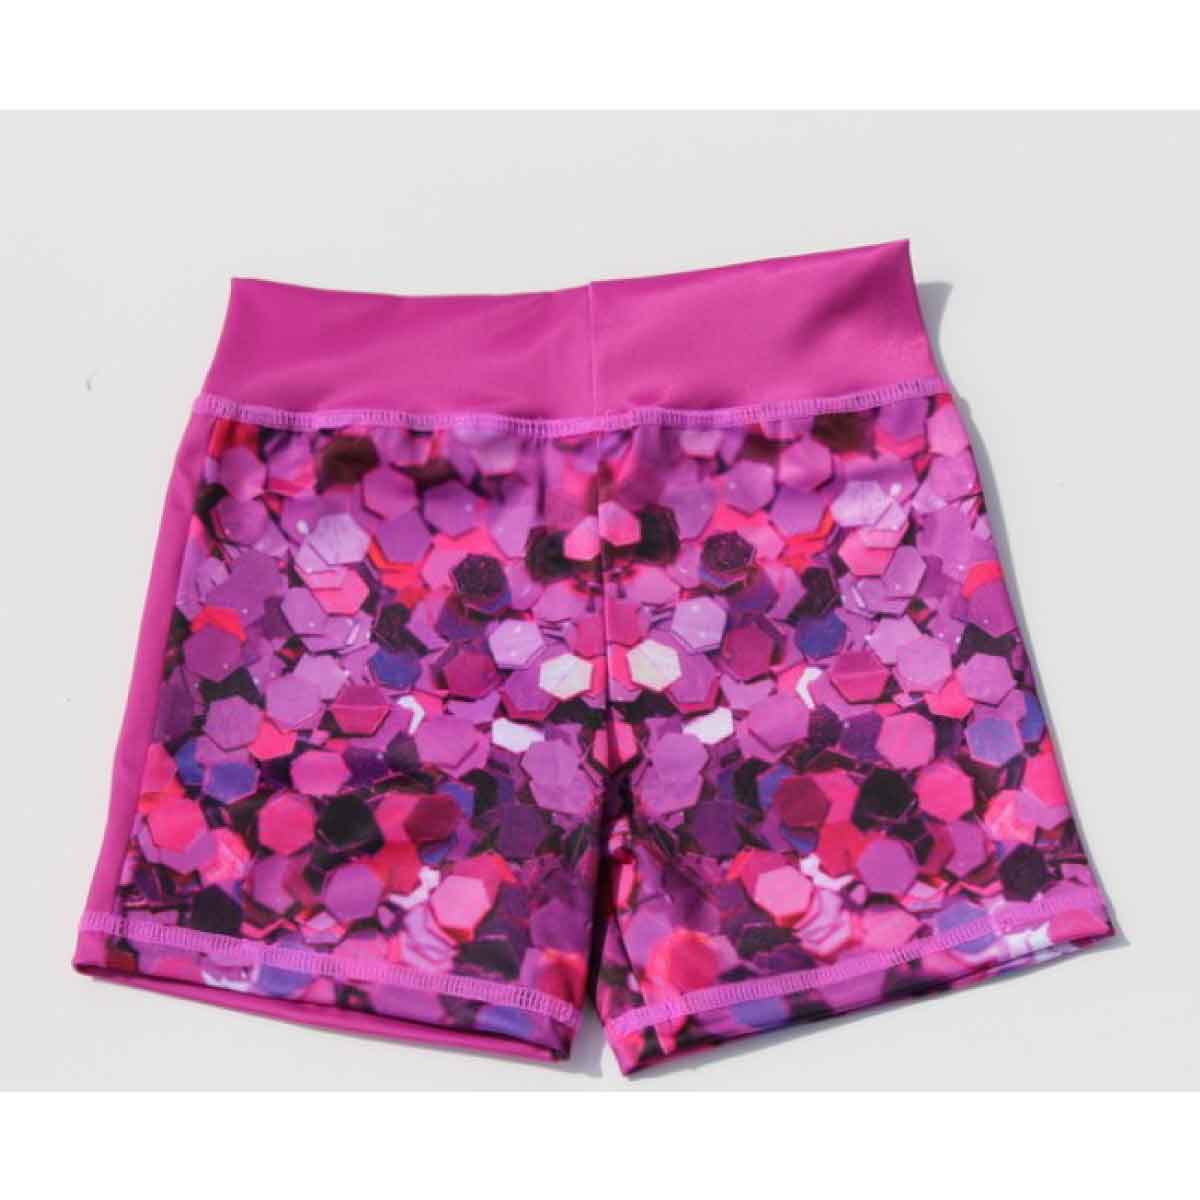 Pink spangle girls' shorts